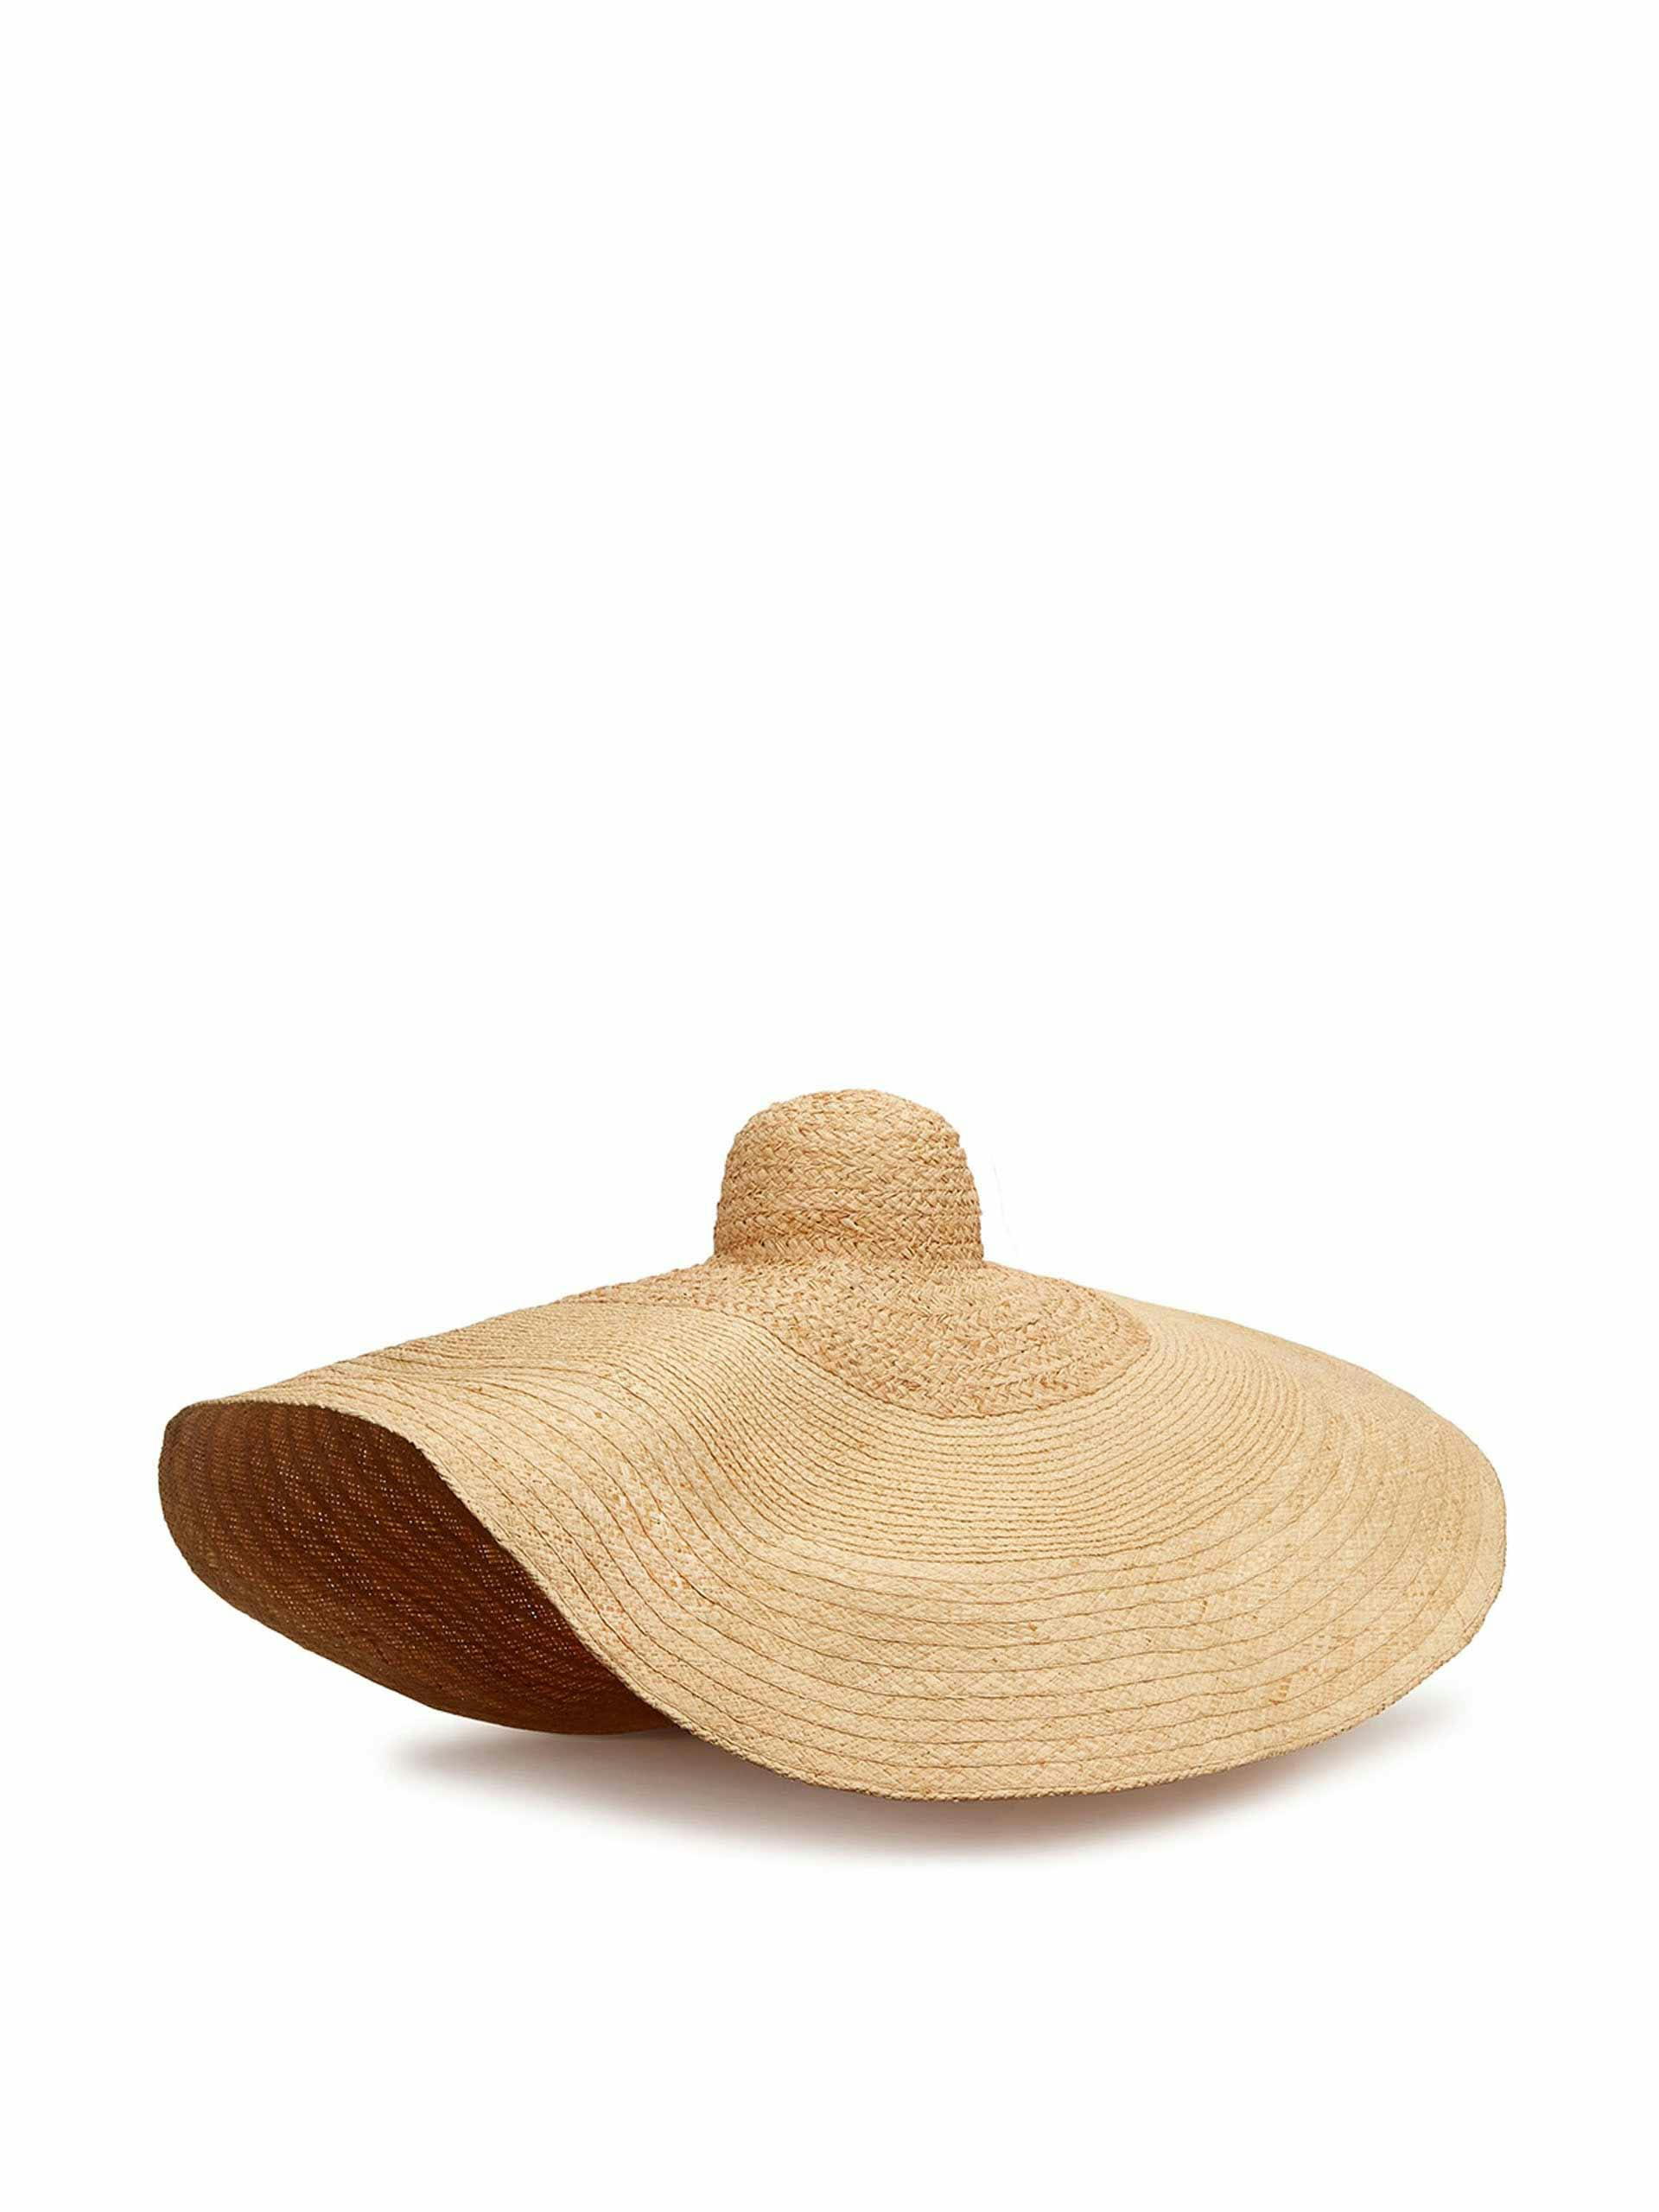 Oversized sand straw sun hat